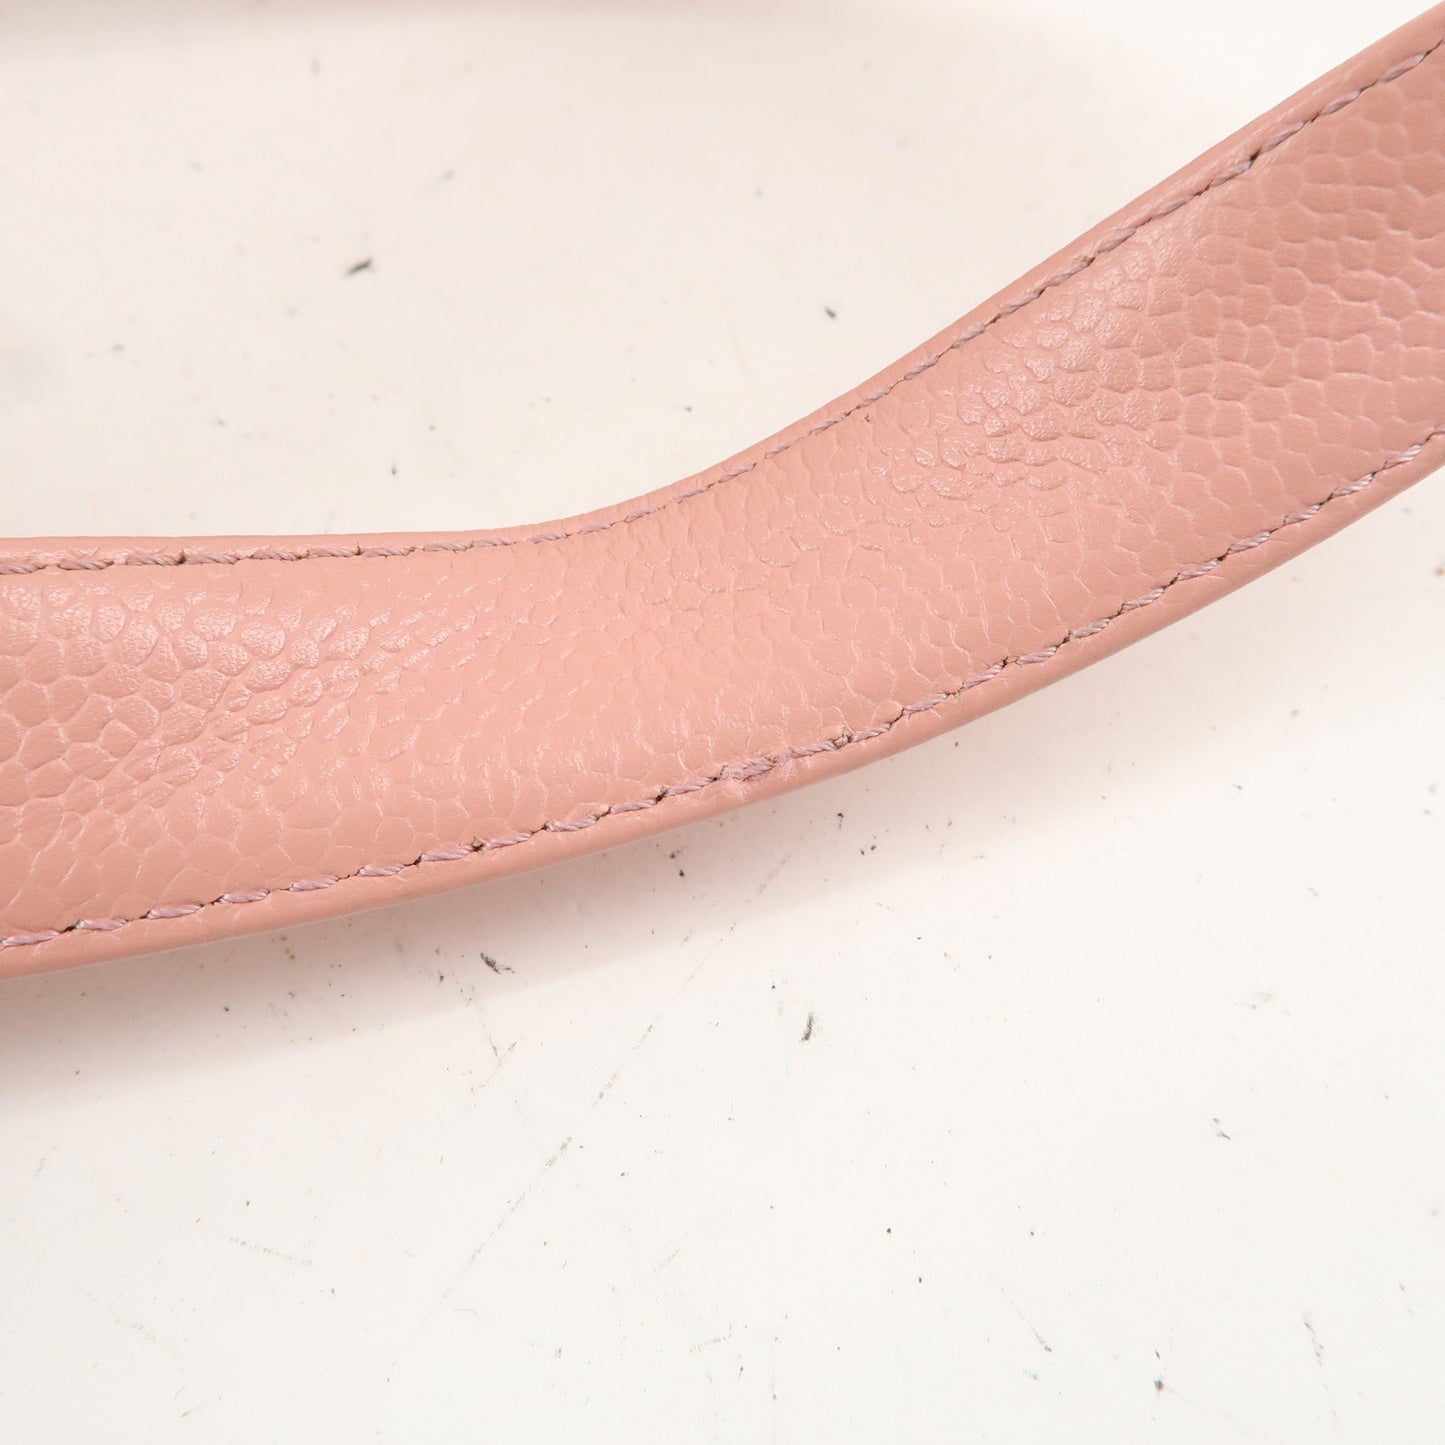 CHANEL Chocolate Bar Caviar Skin Shoulder Bag Hand Bag Pink